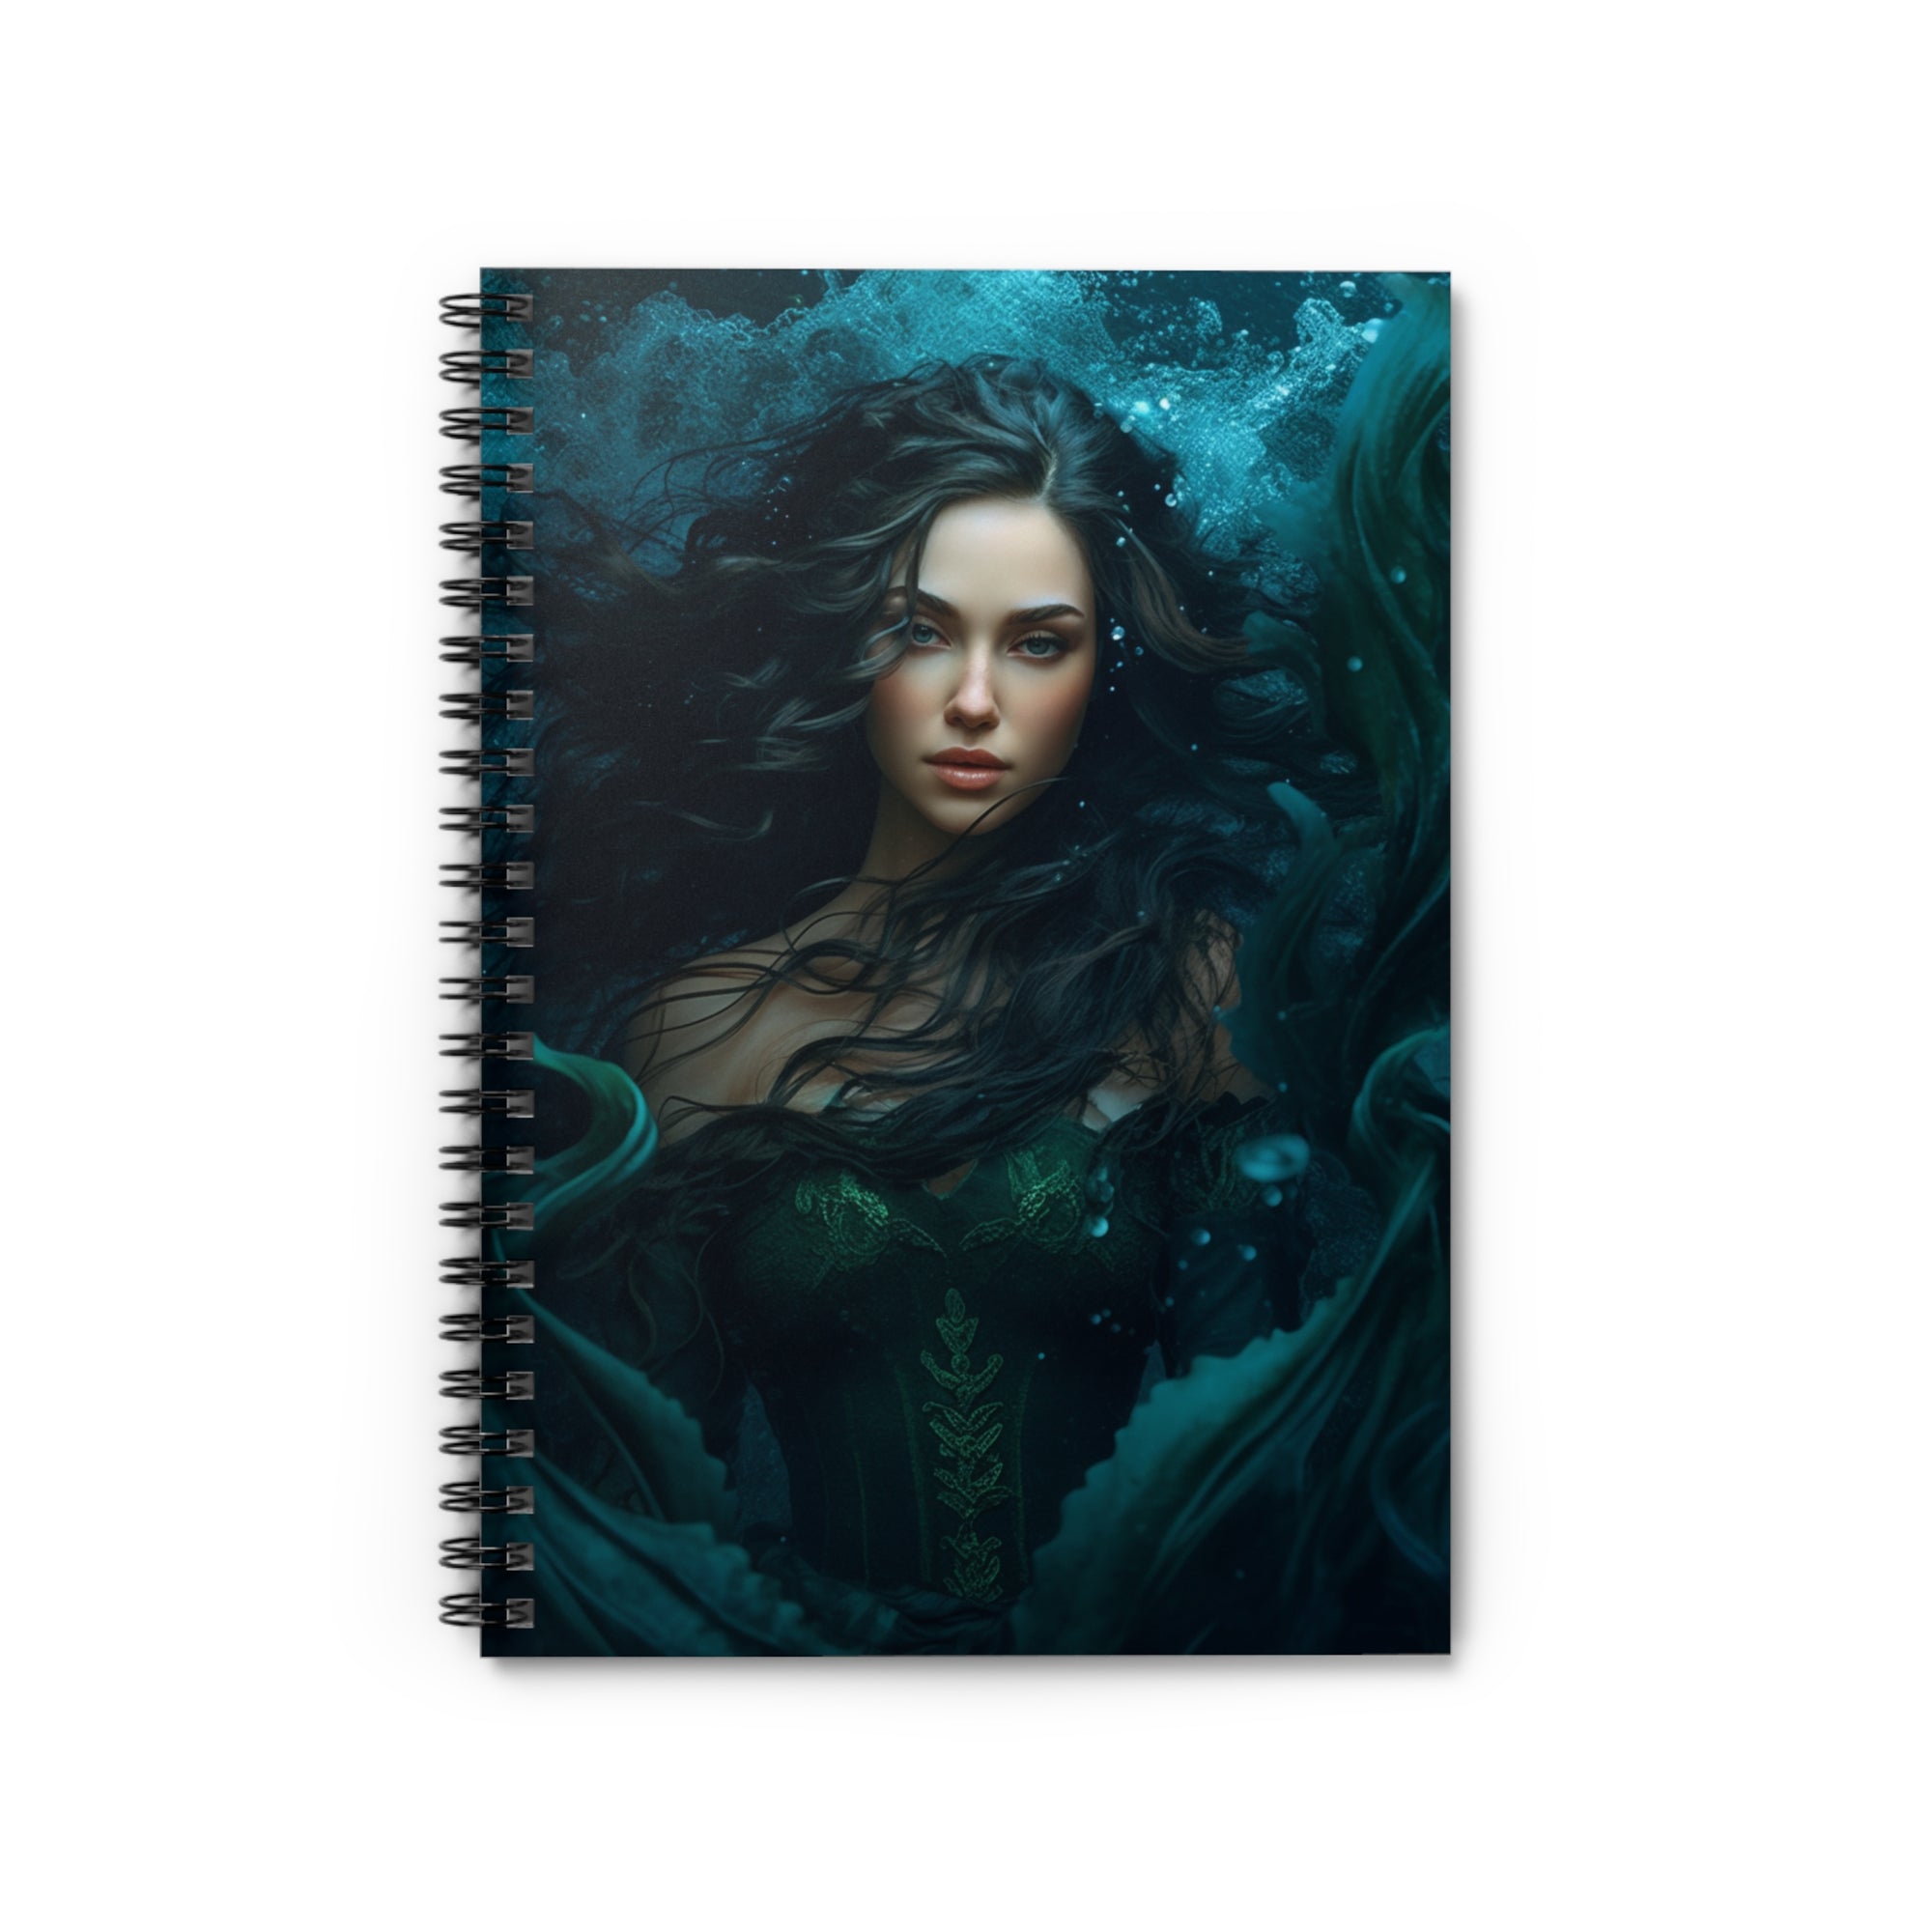 Mermaid Goddess Spiral Ruled Line Notebook for Her, Soft Cover #1